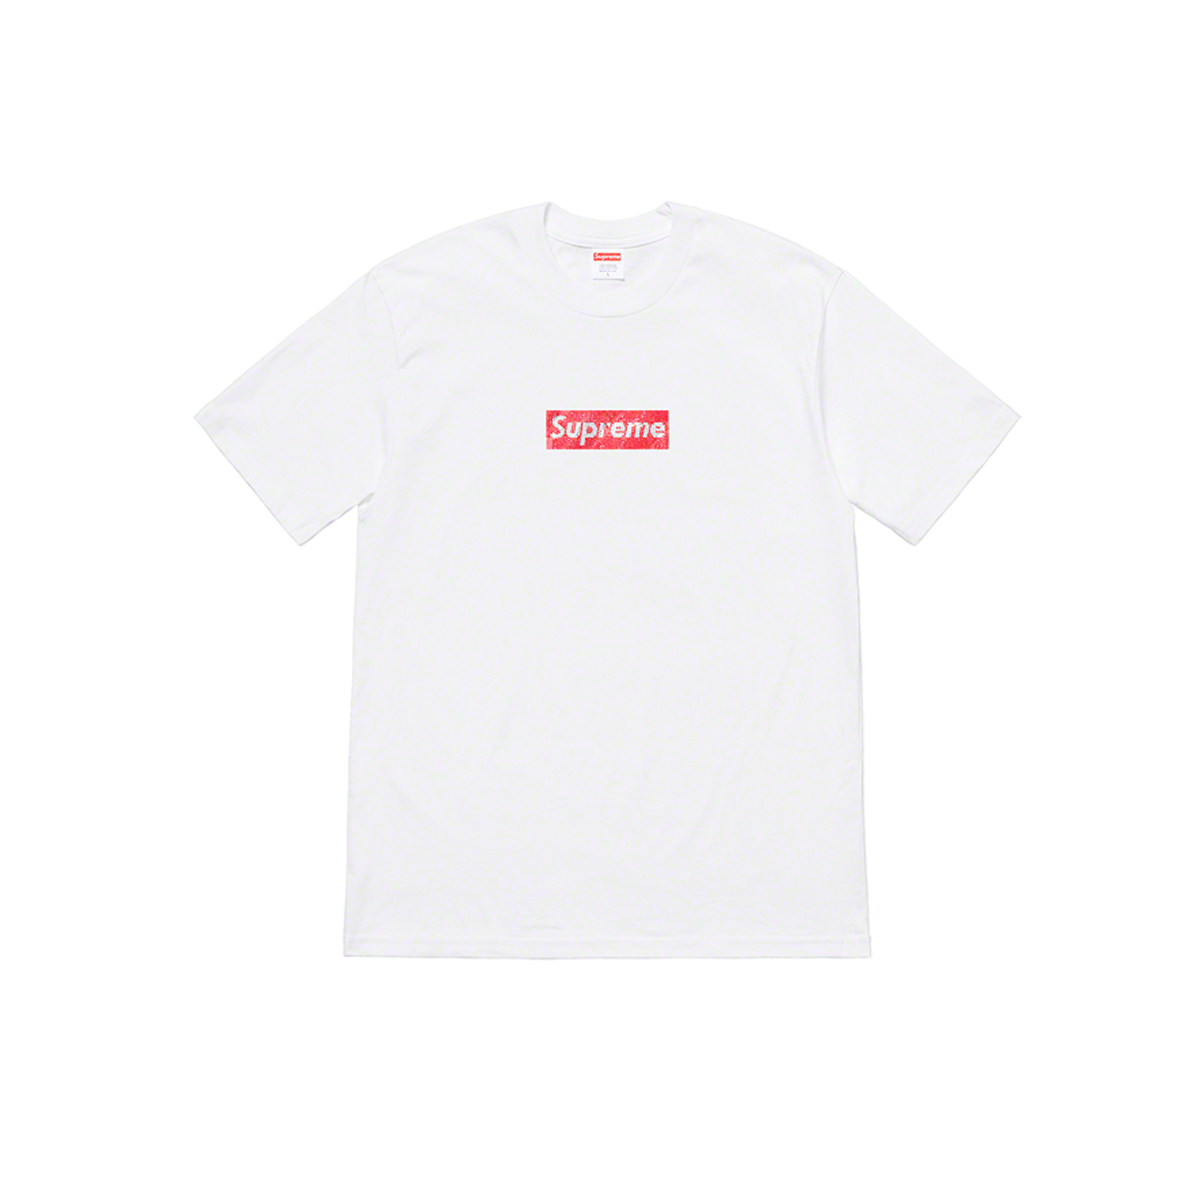 Supreme x Swarovski Box Logo T-Shirt 25th Anniversary Tee White (SS19